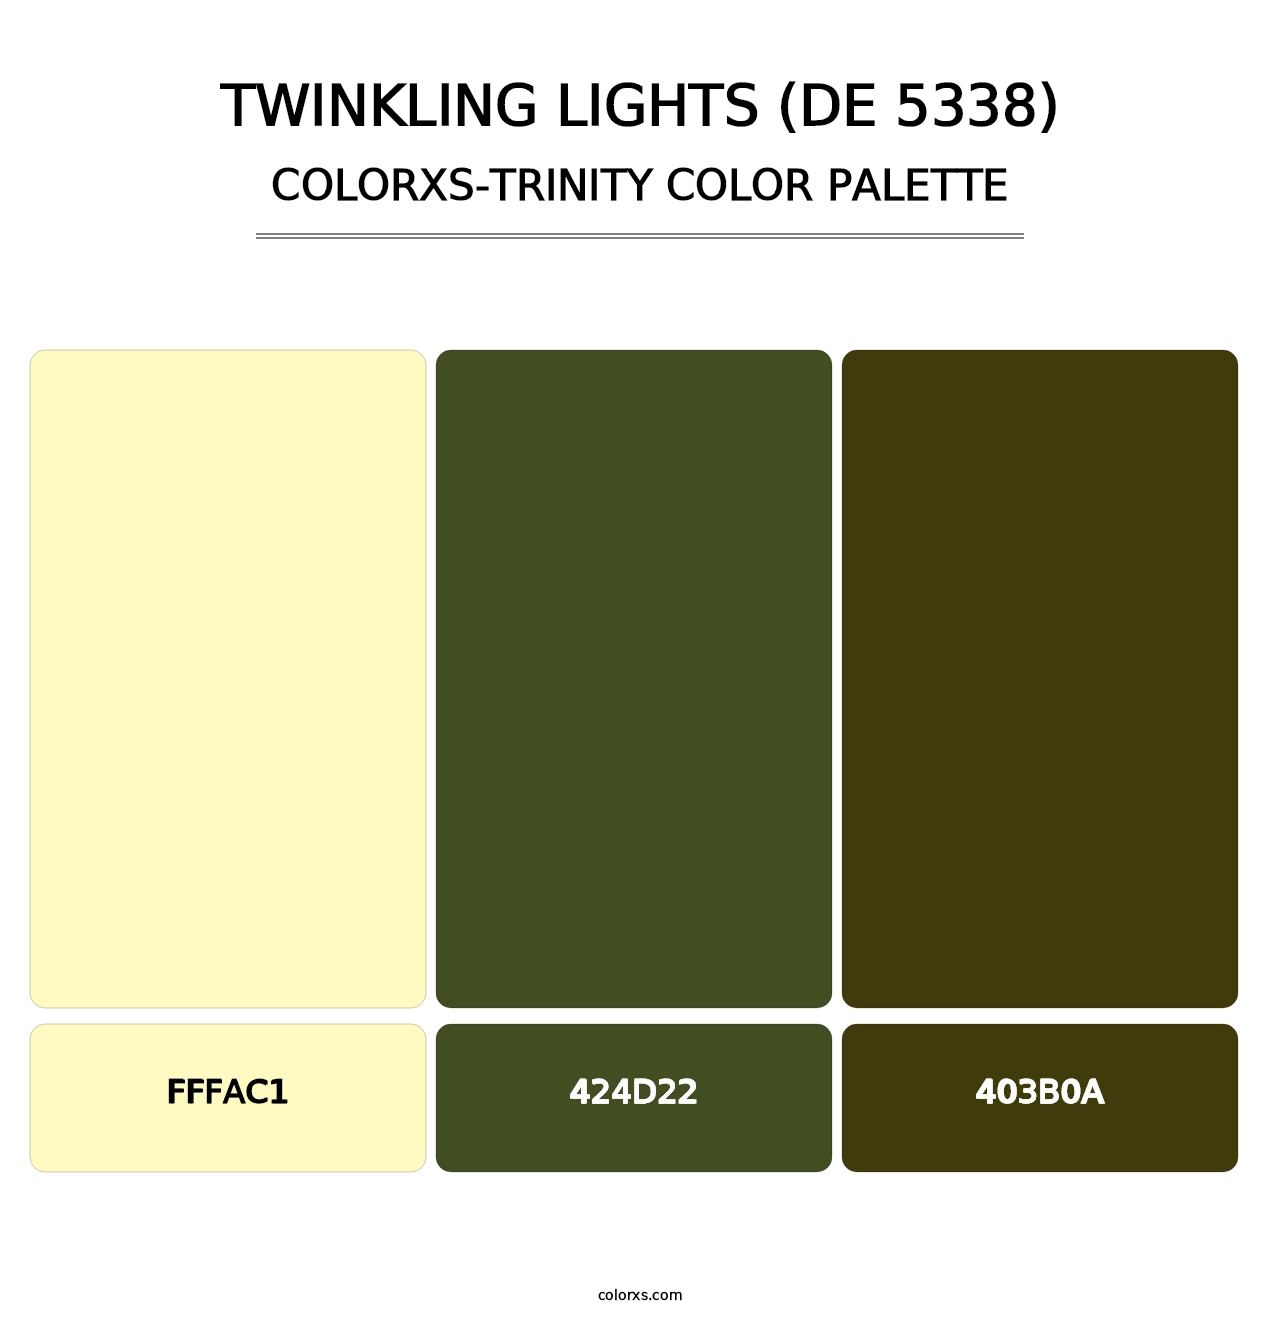 Twinkling Lights (DE 5338) - Colorxs Trinity Palette